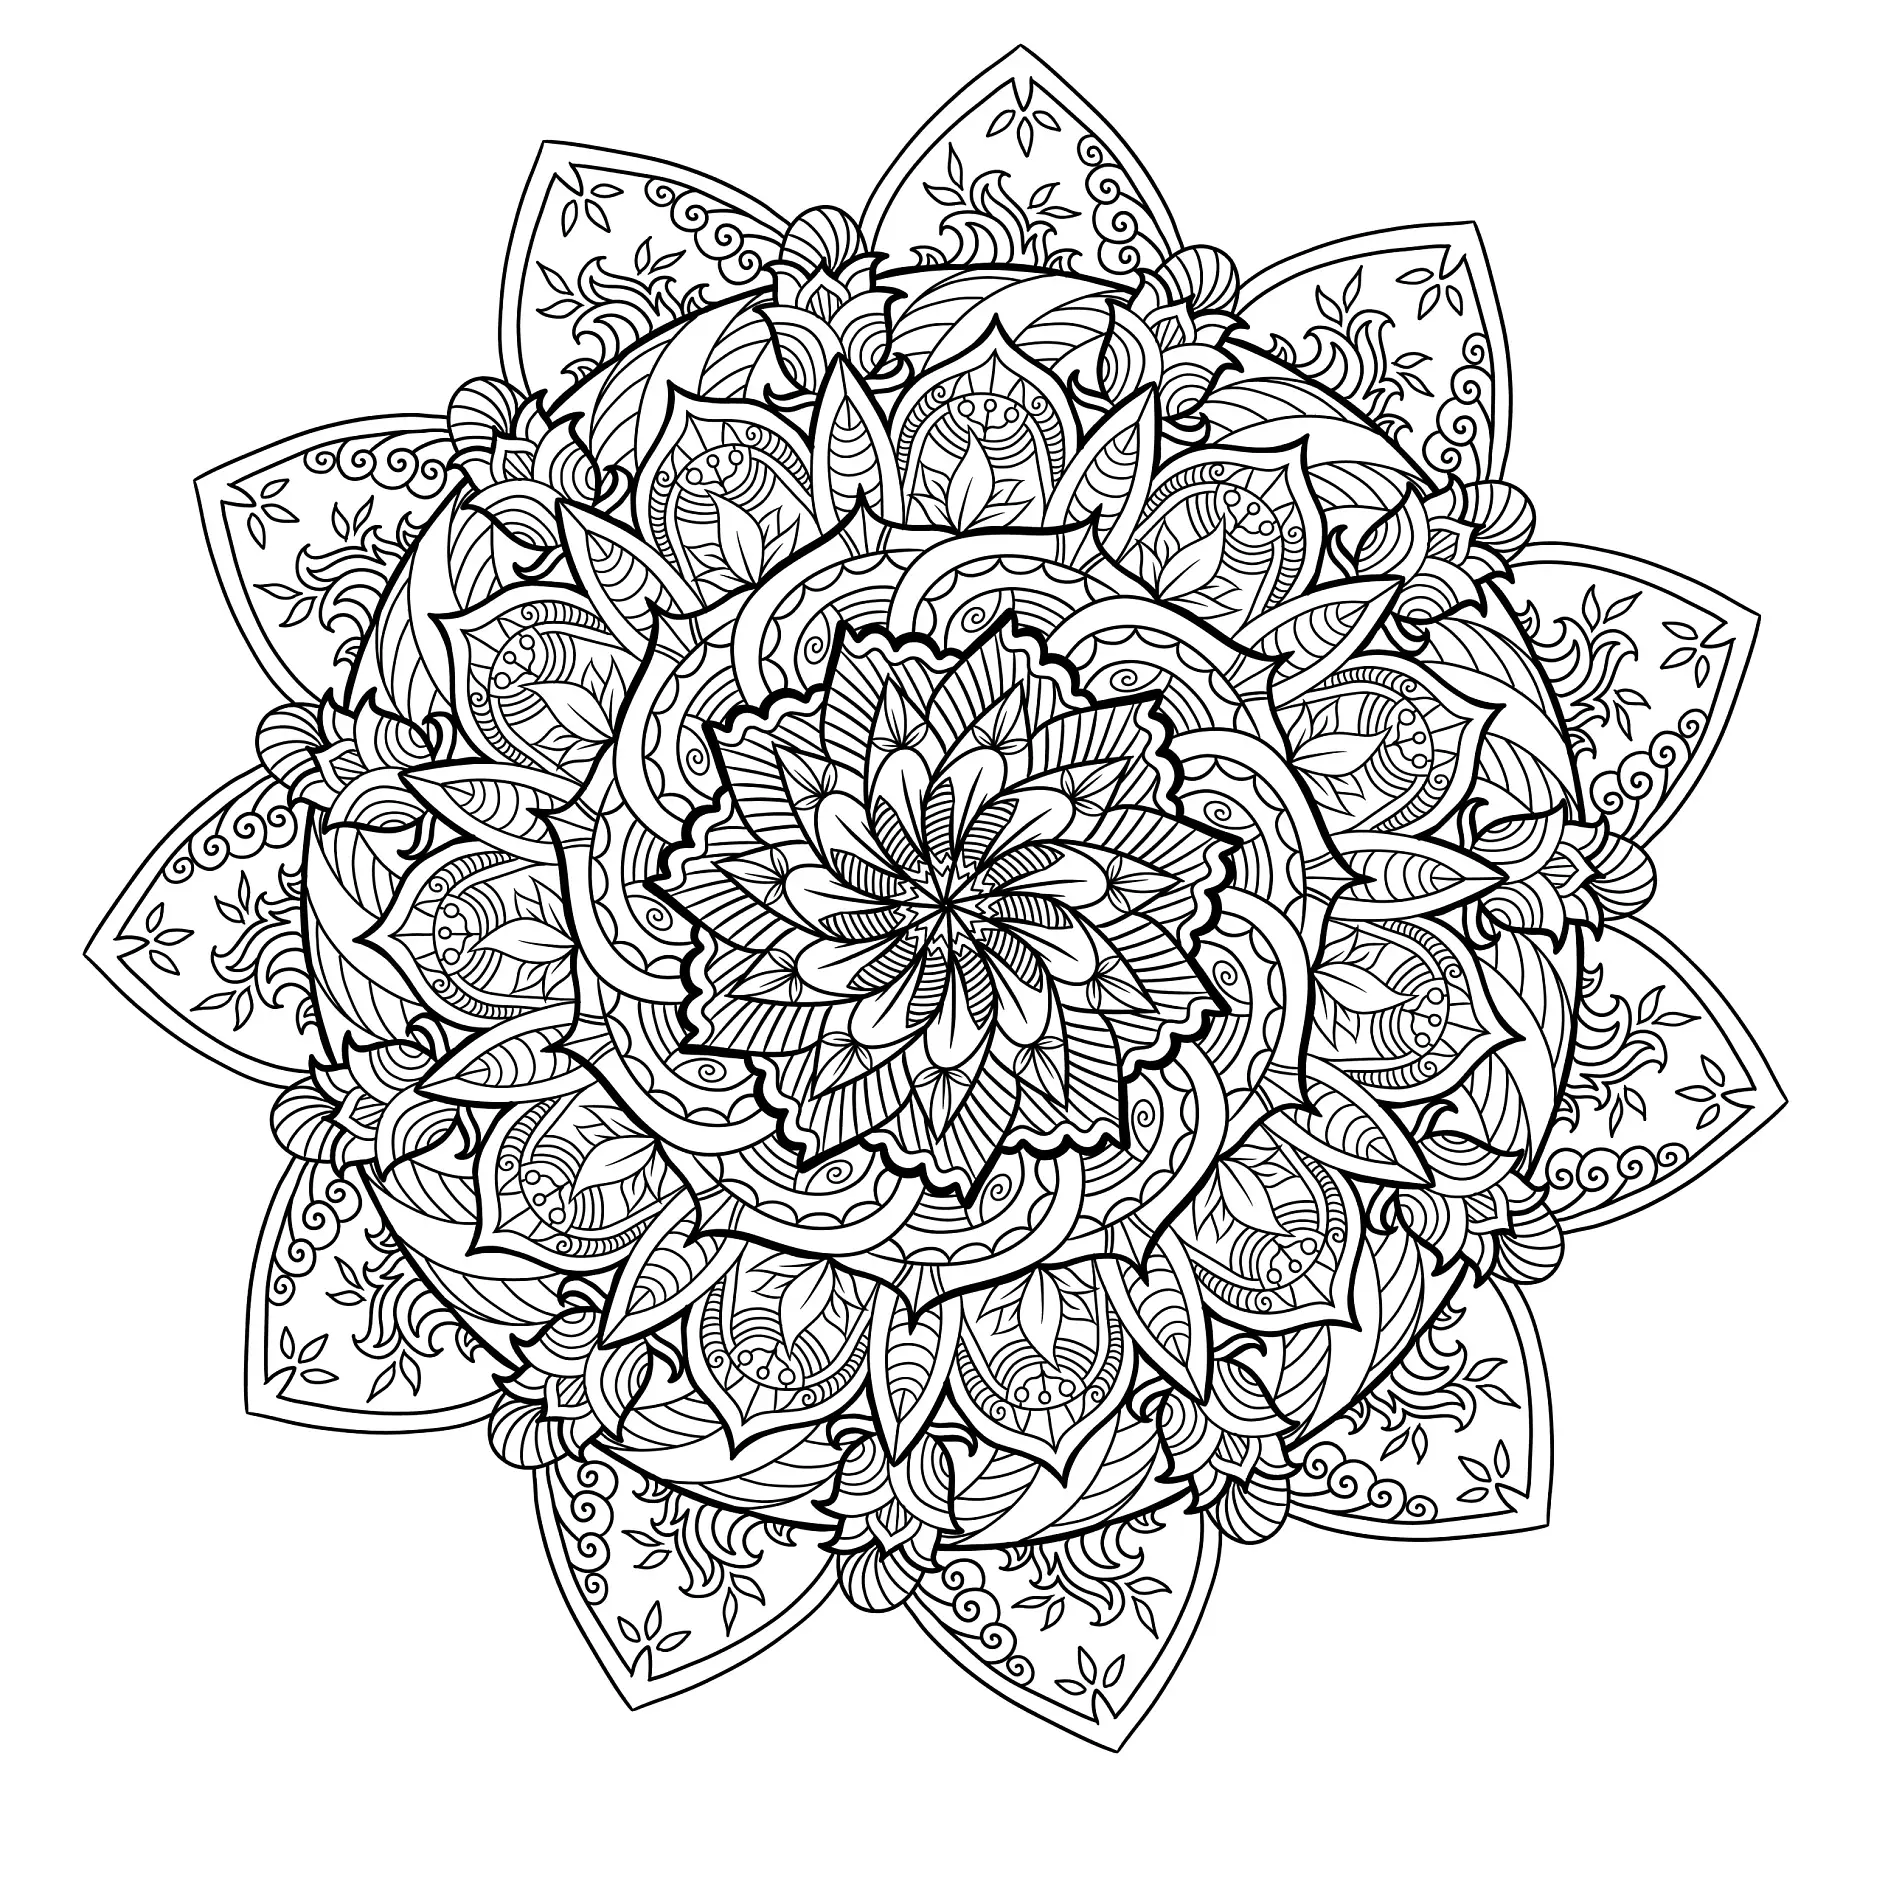 Ausmalbild Mandala mit komplexen floralen Mustern